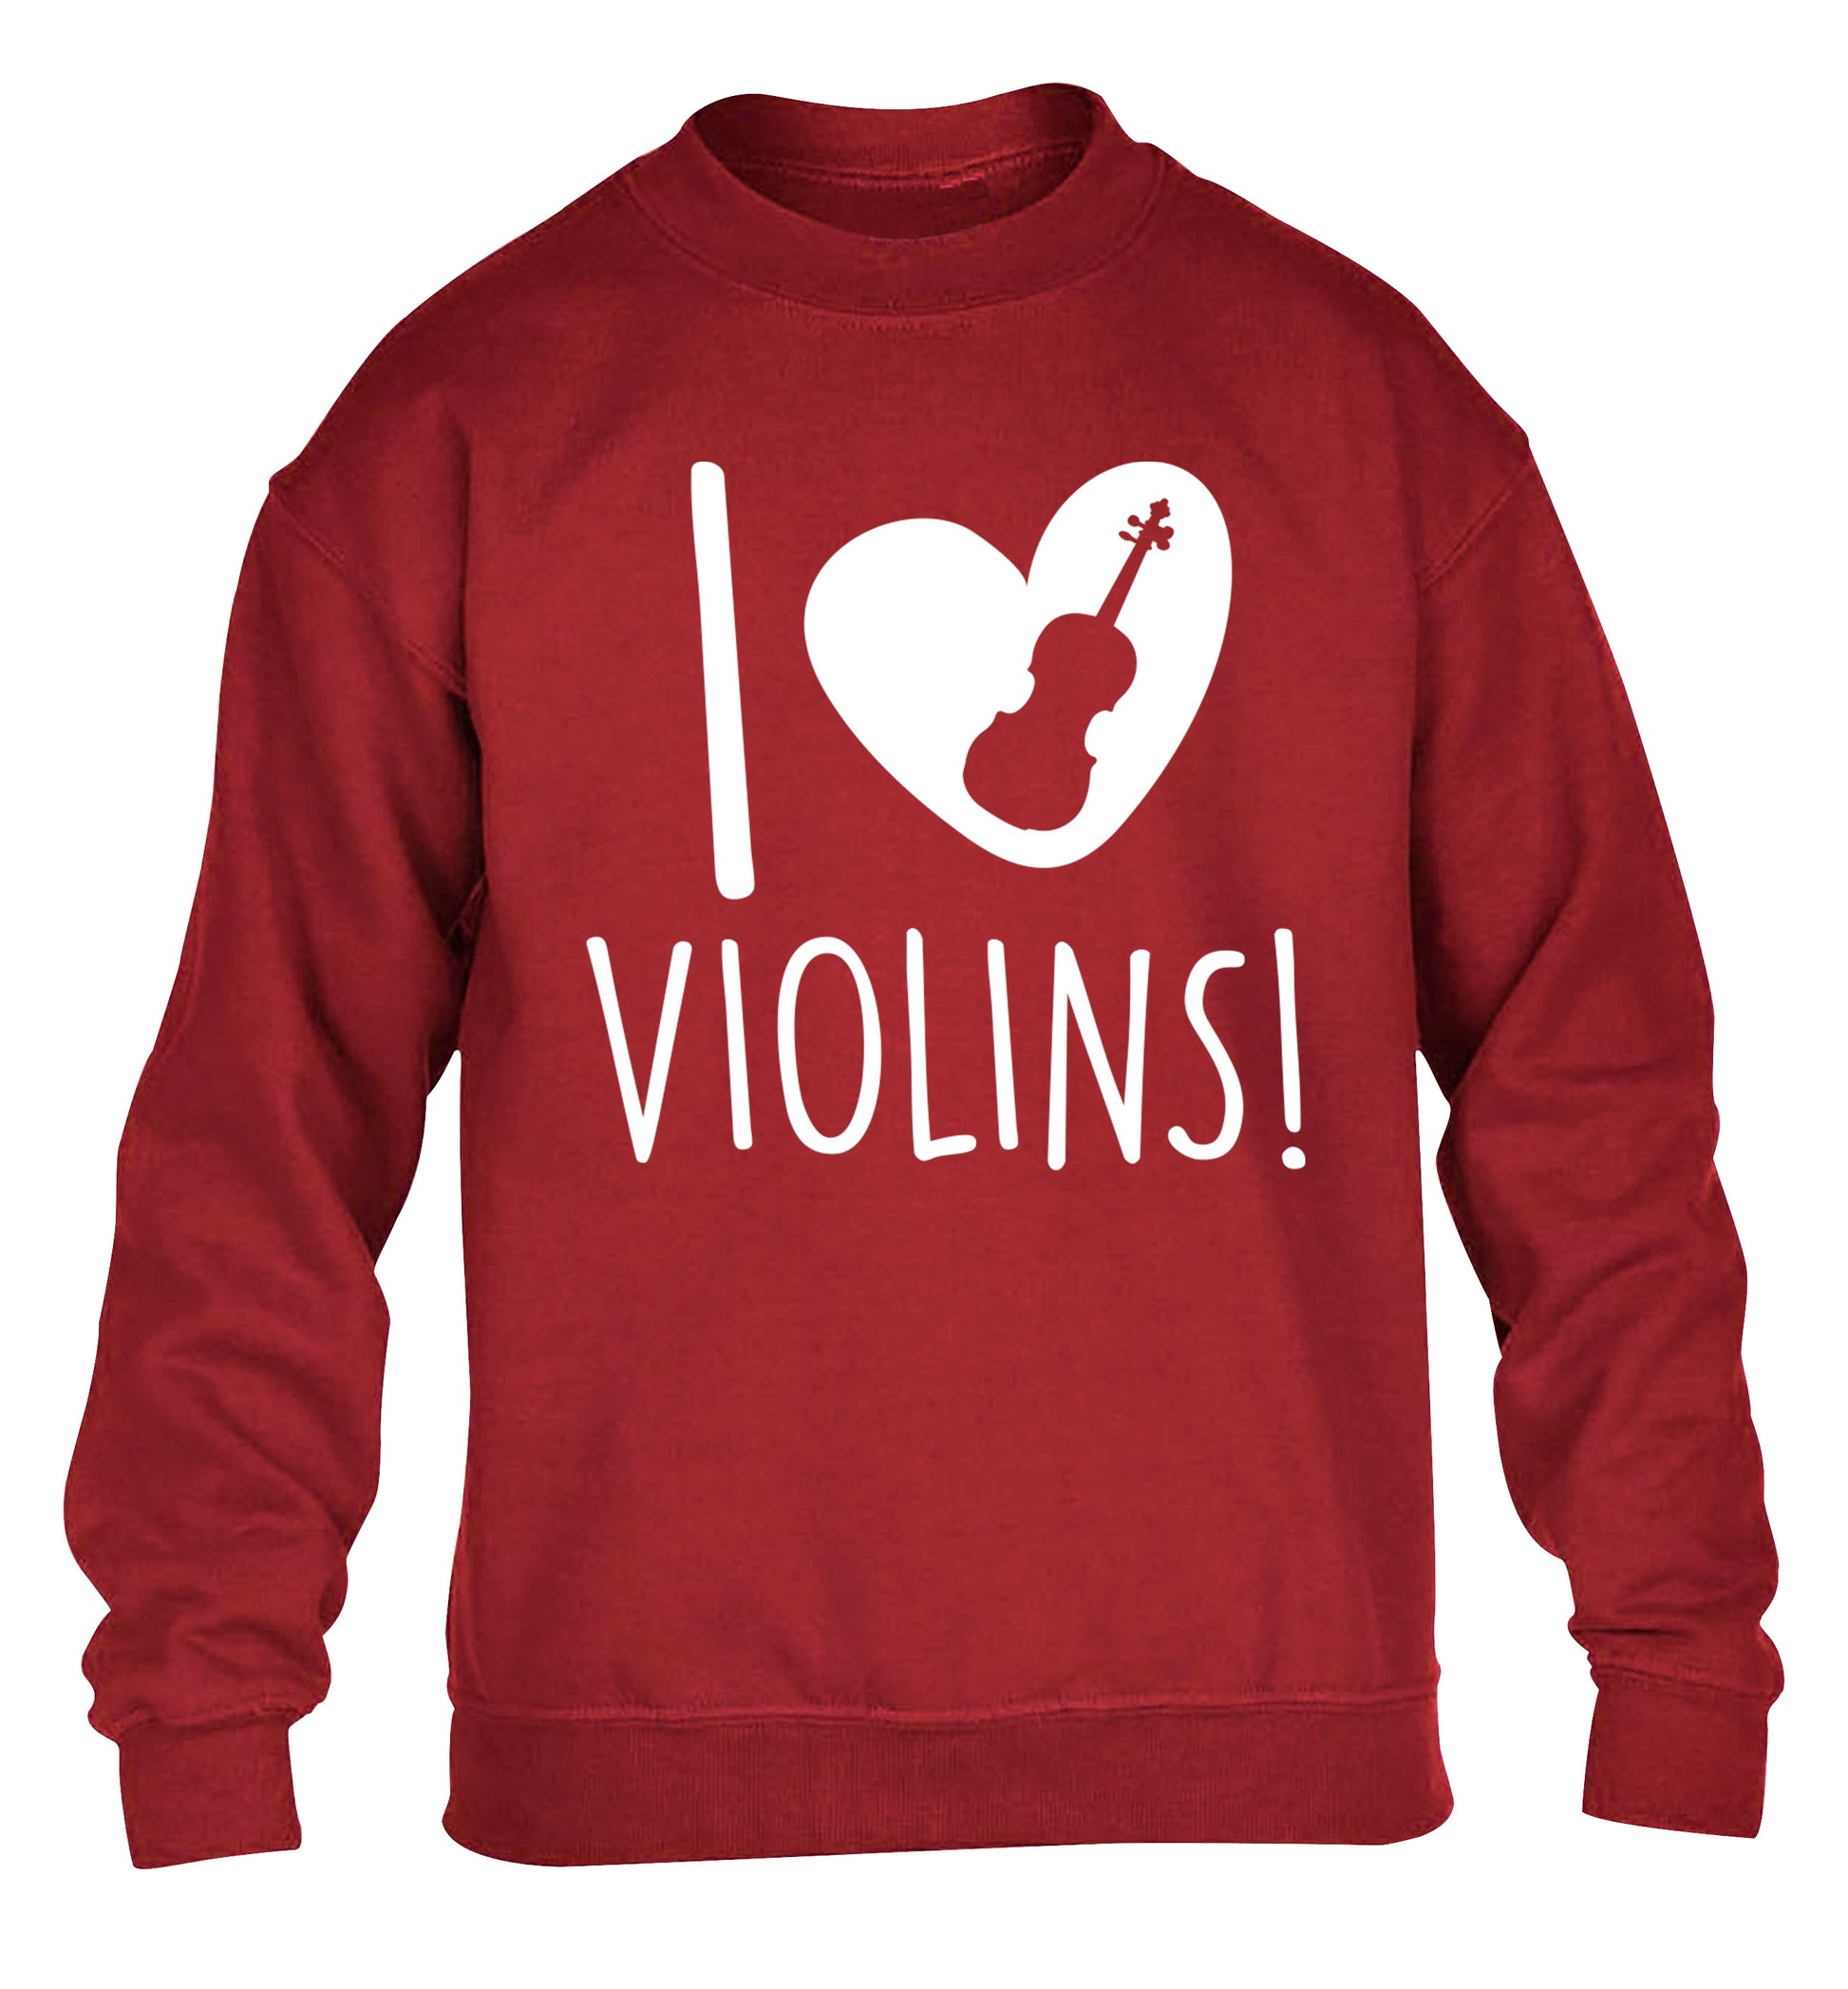 I Love Violins children's grey sweater 12-13 Years